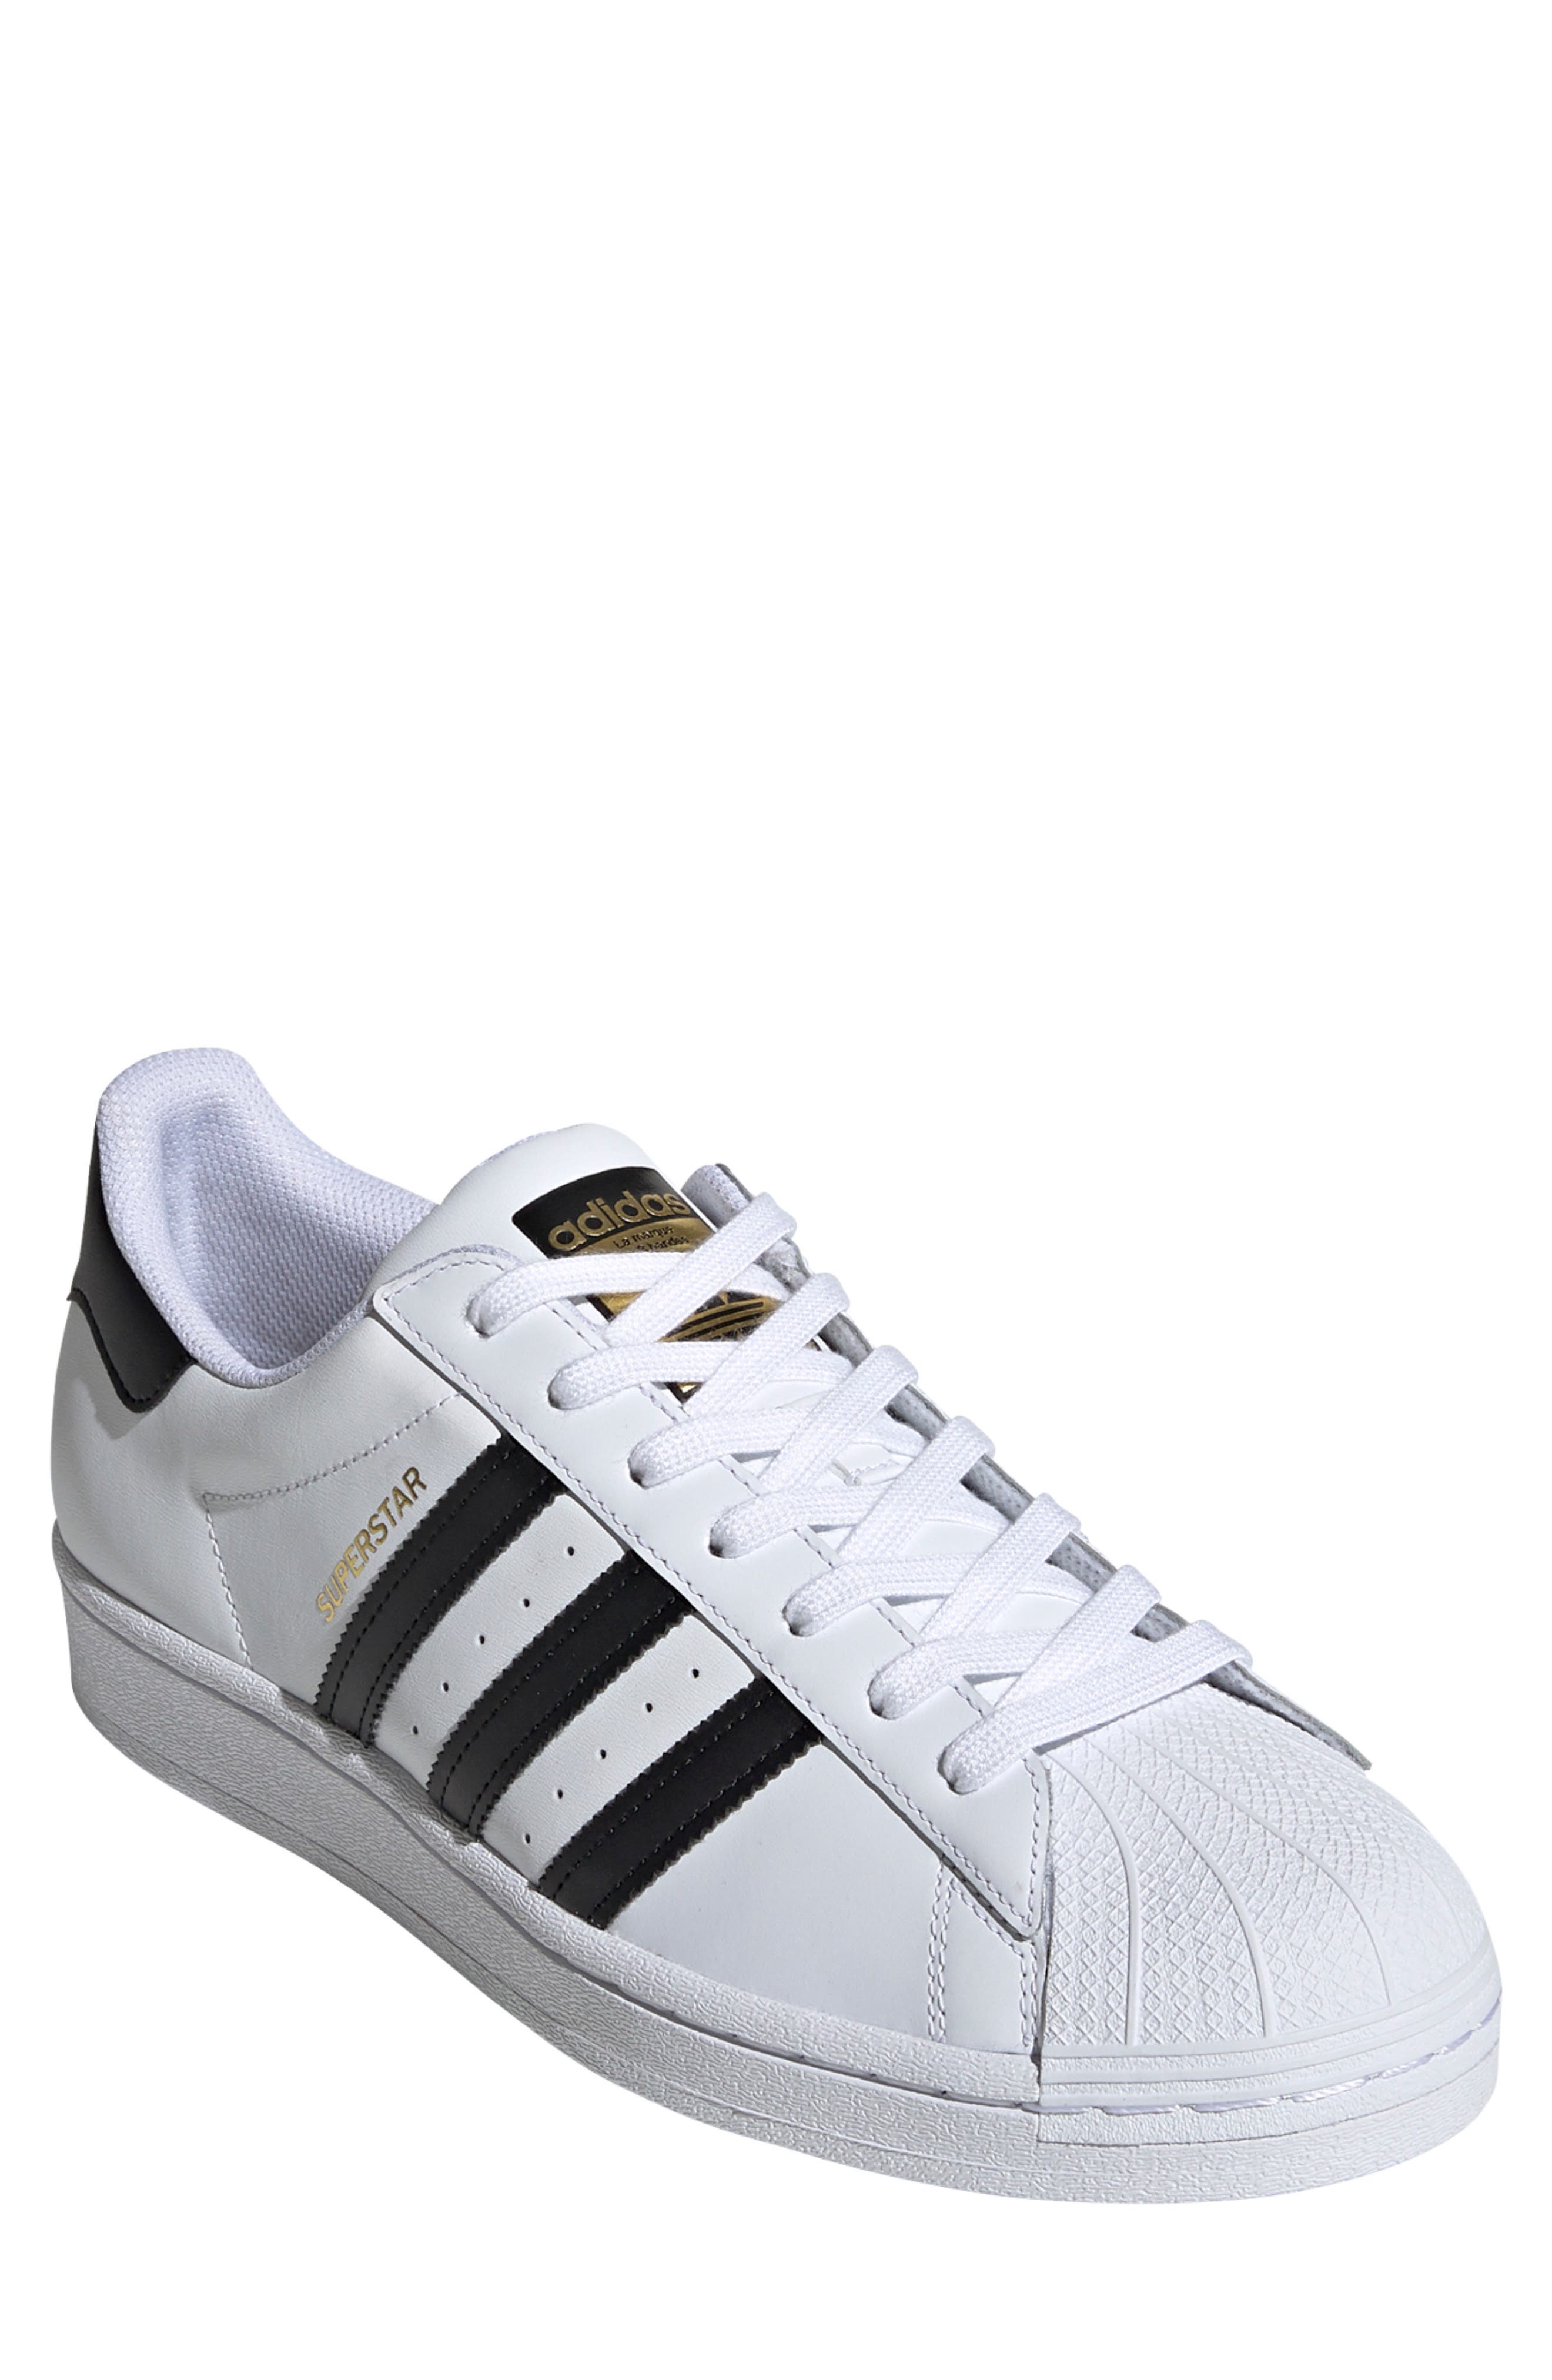 adidas Superstar Sneaker in Ftwr White/Core Black